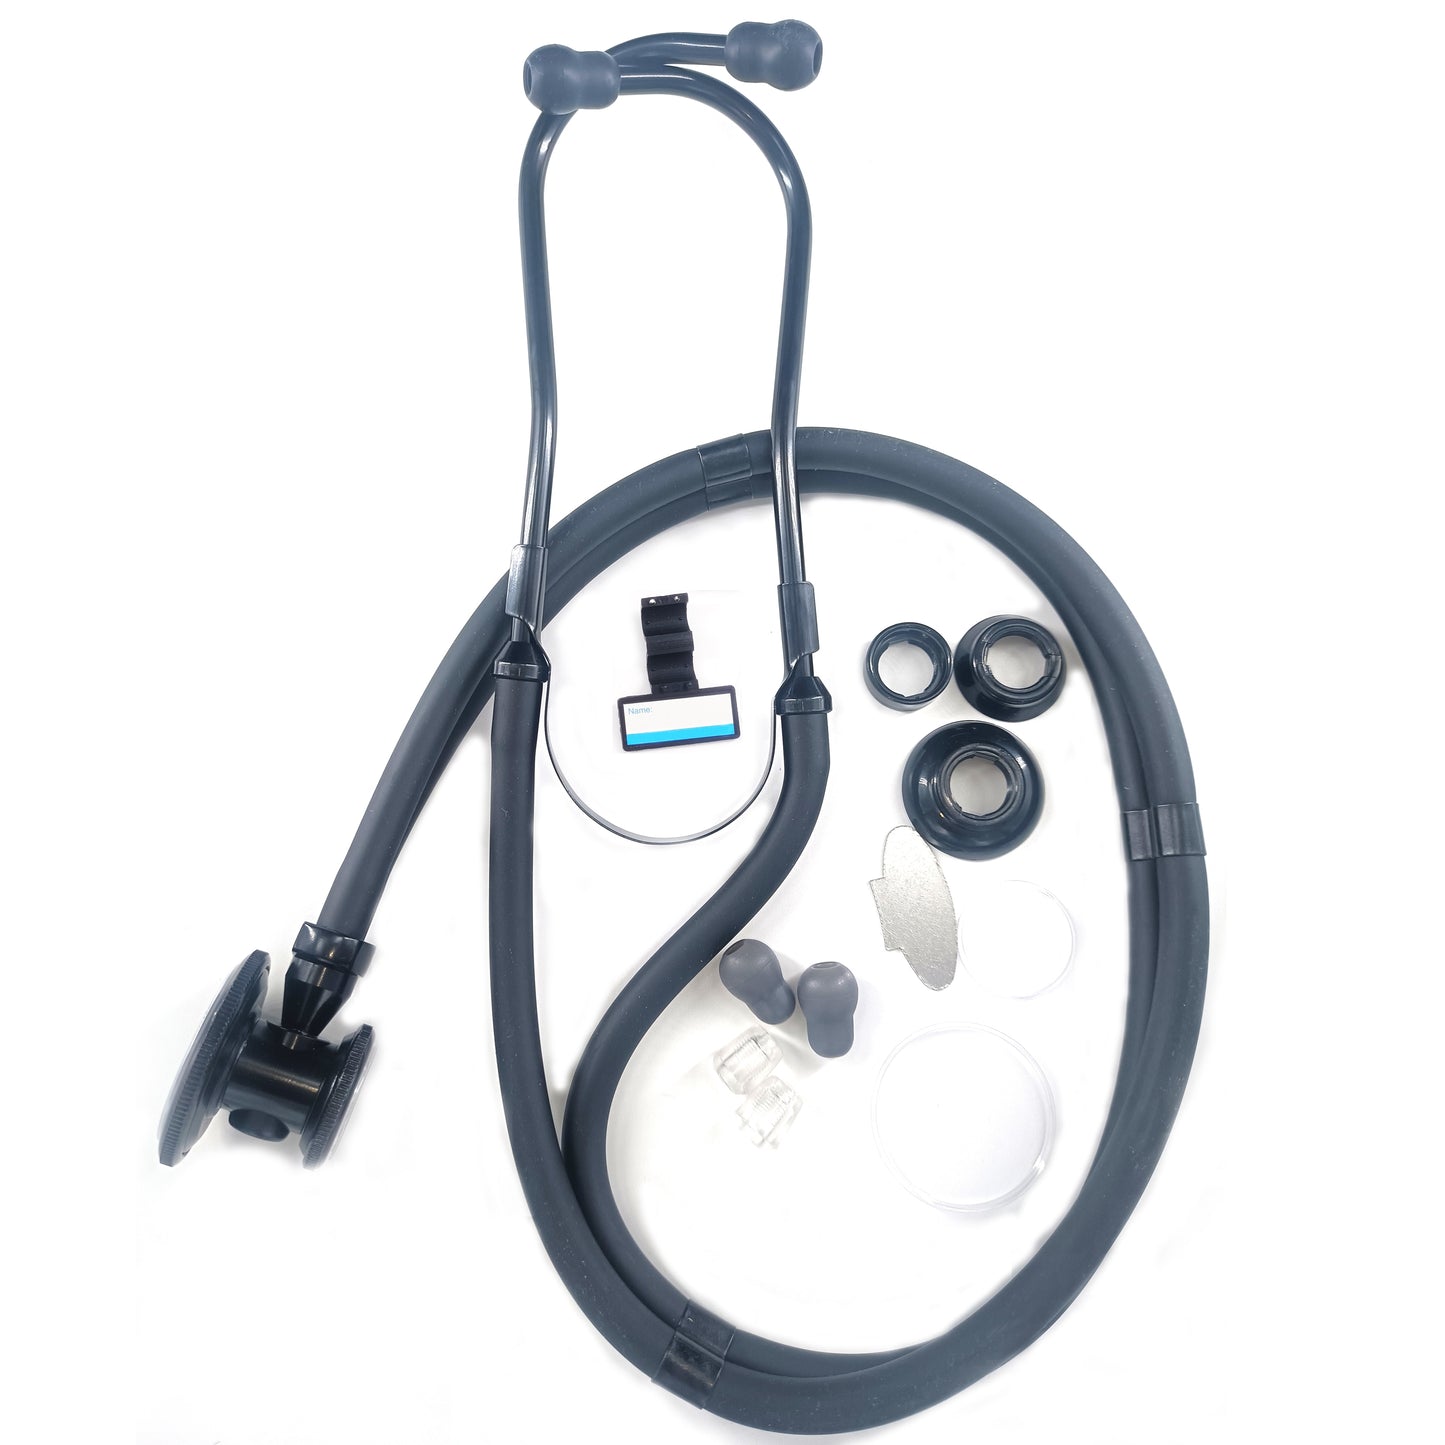 Professional Medical Stethoscope